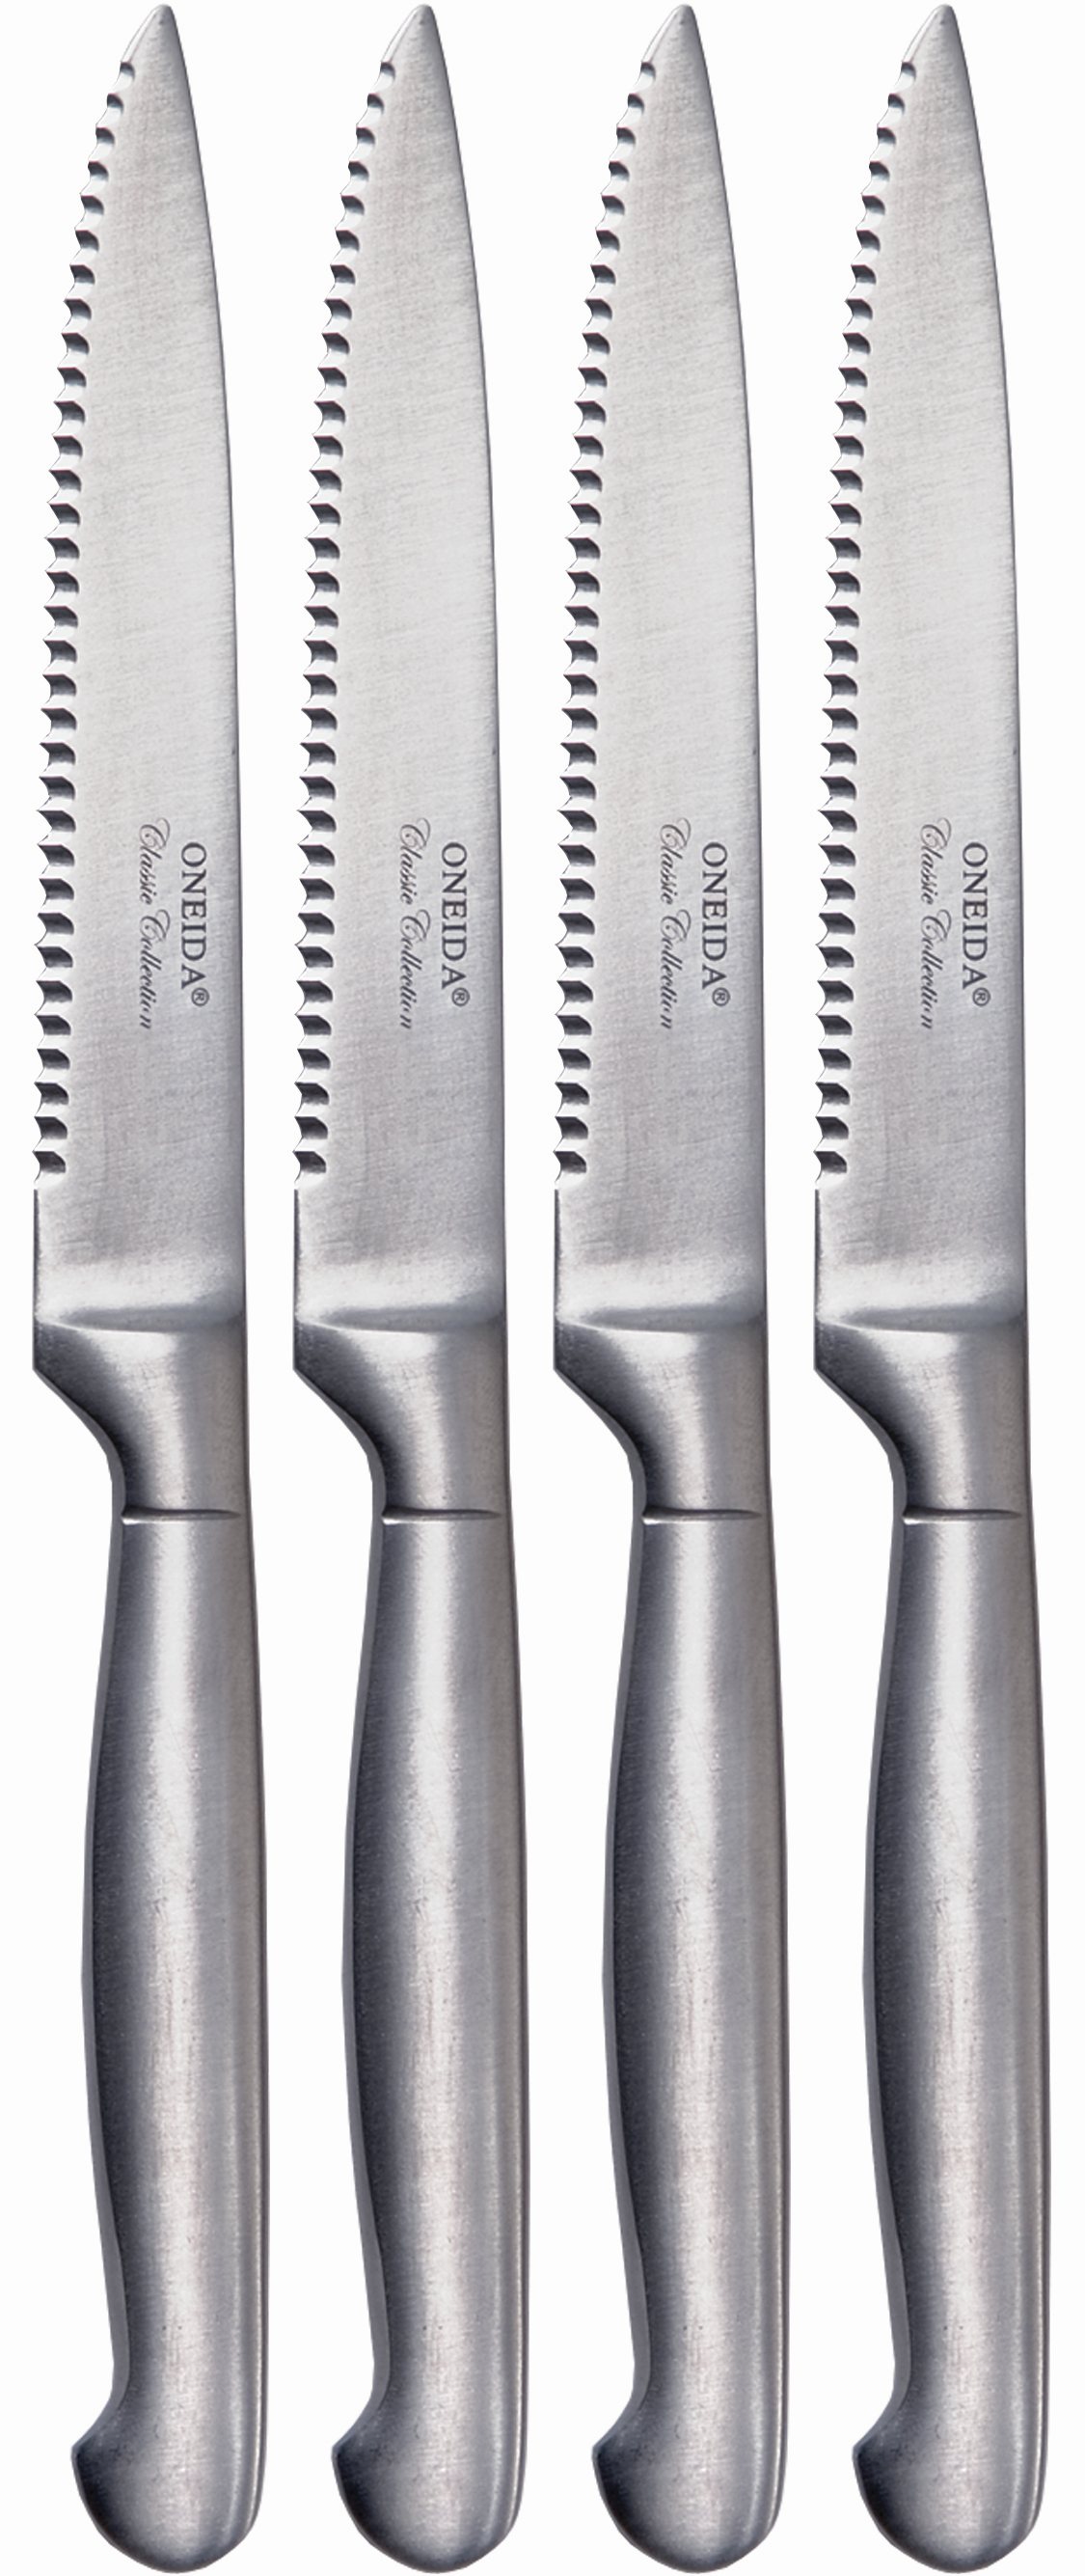 https://www.kitchenwarenews.com/wp-content/uploads/2015/11/Oneida-55103-4pc-Steak-Knives-Only.jpg